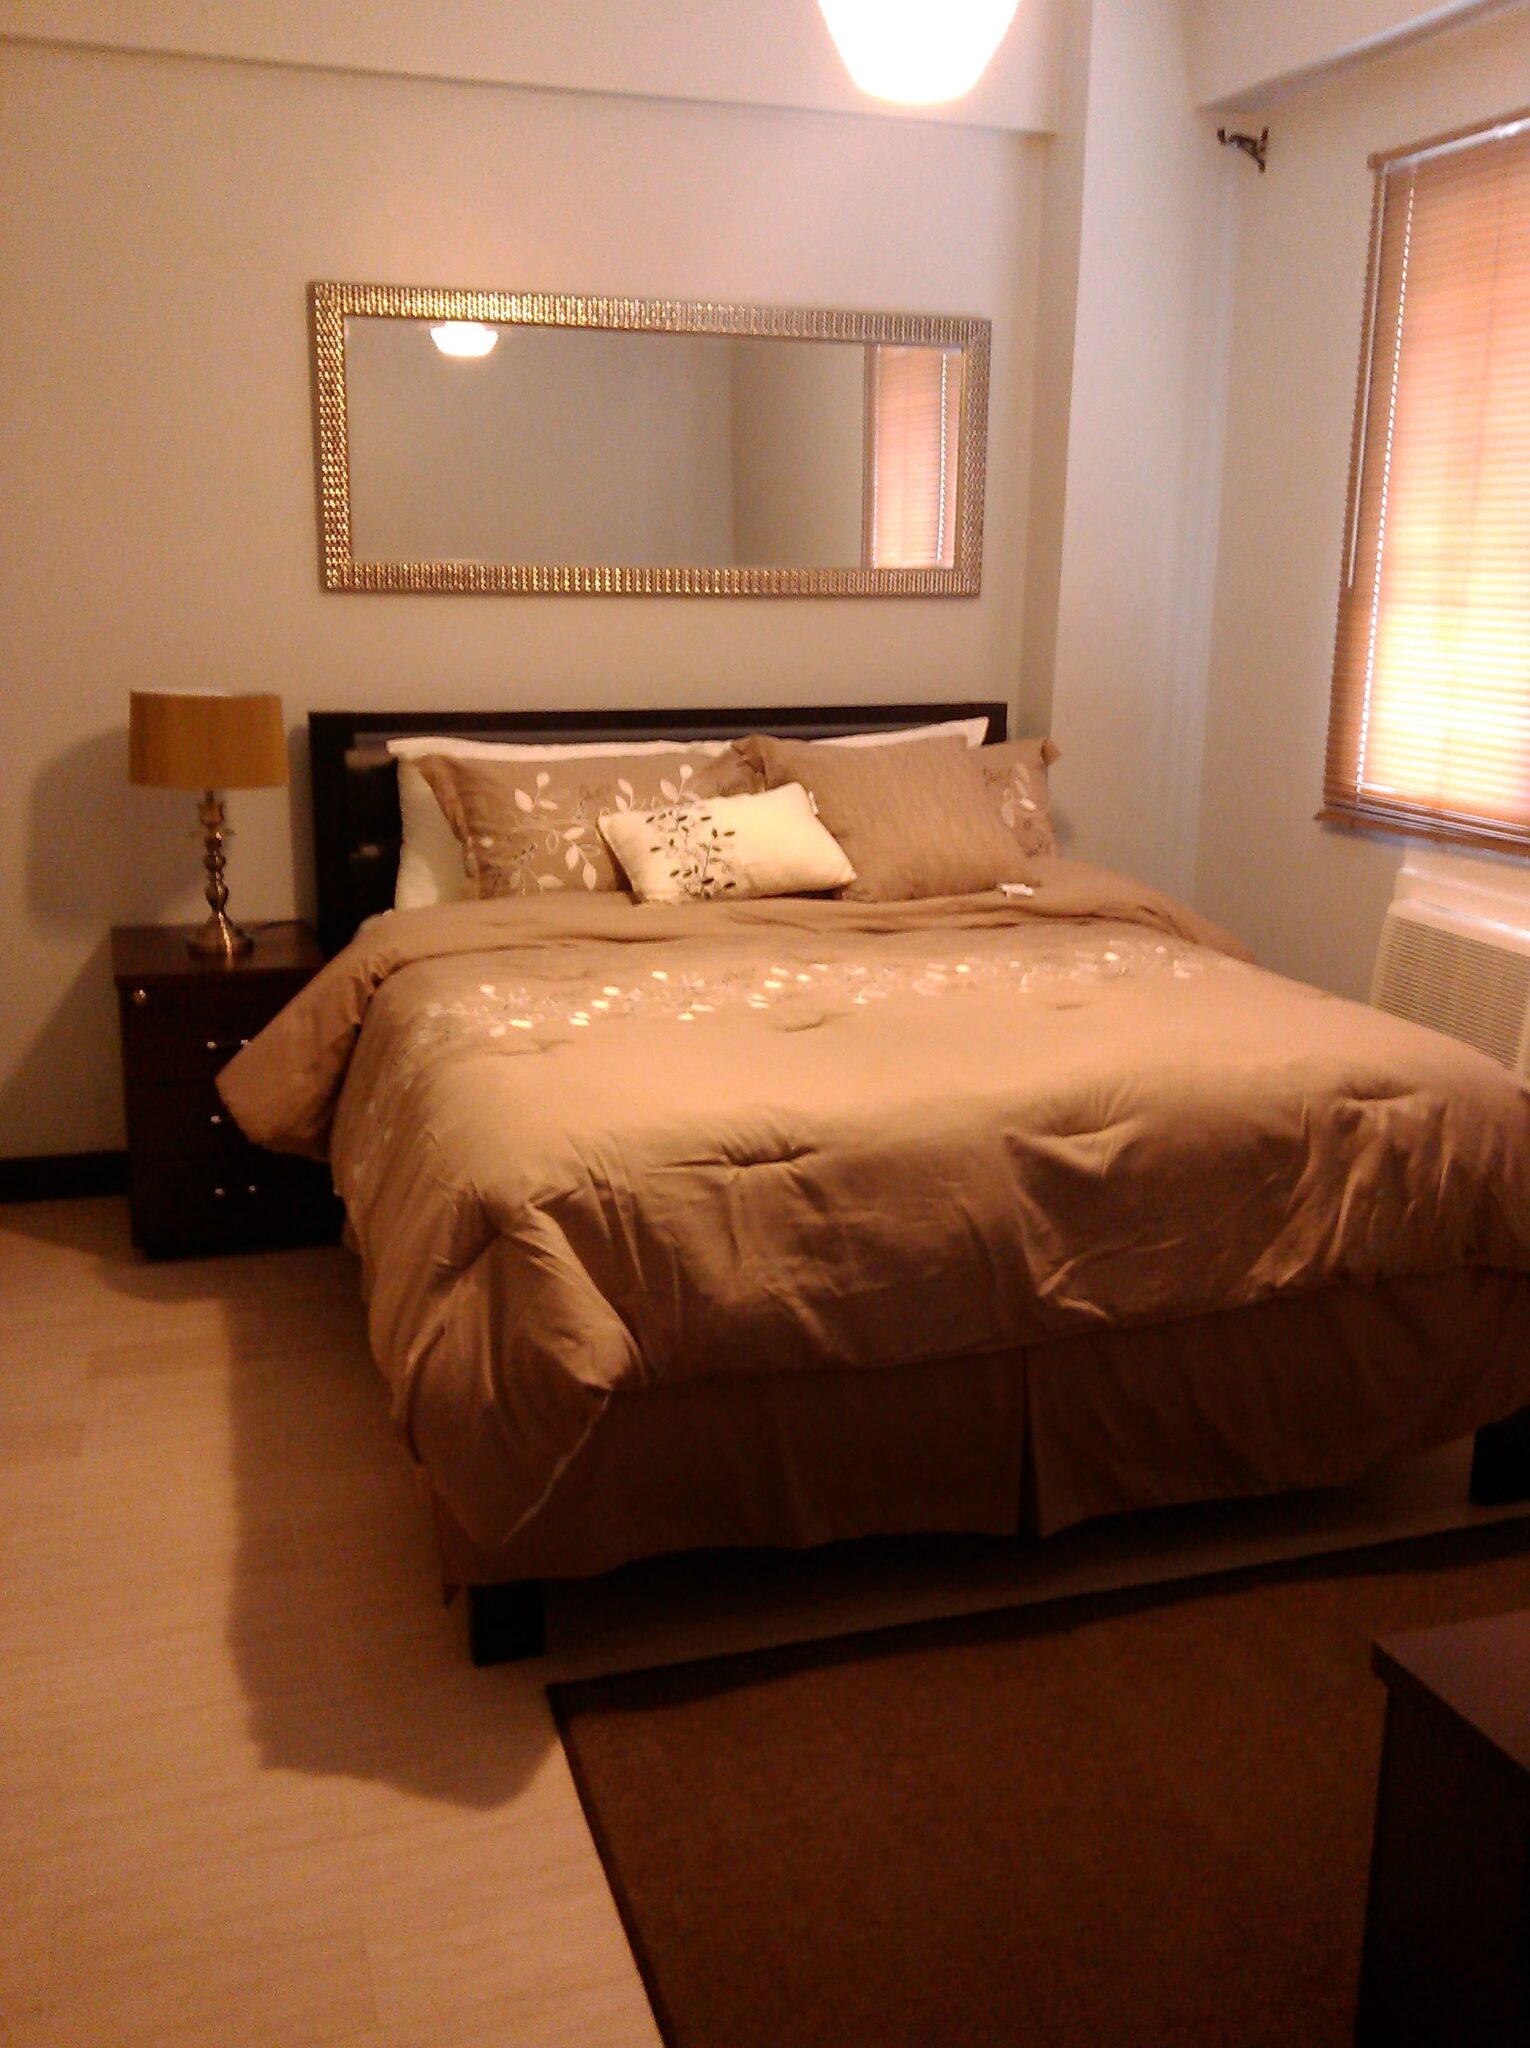 1 Bedroom Condominium Unit For Rent in Newport City, Pasay City